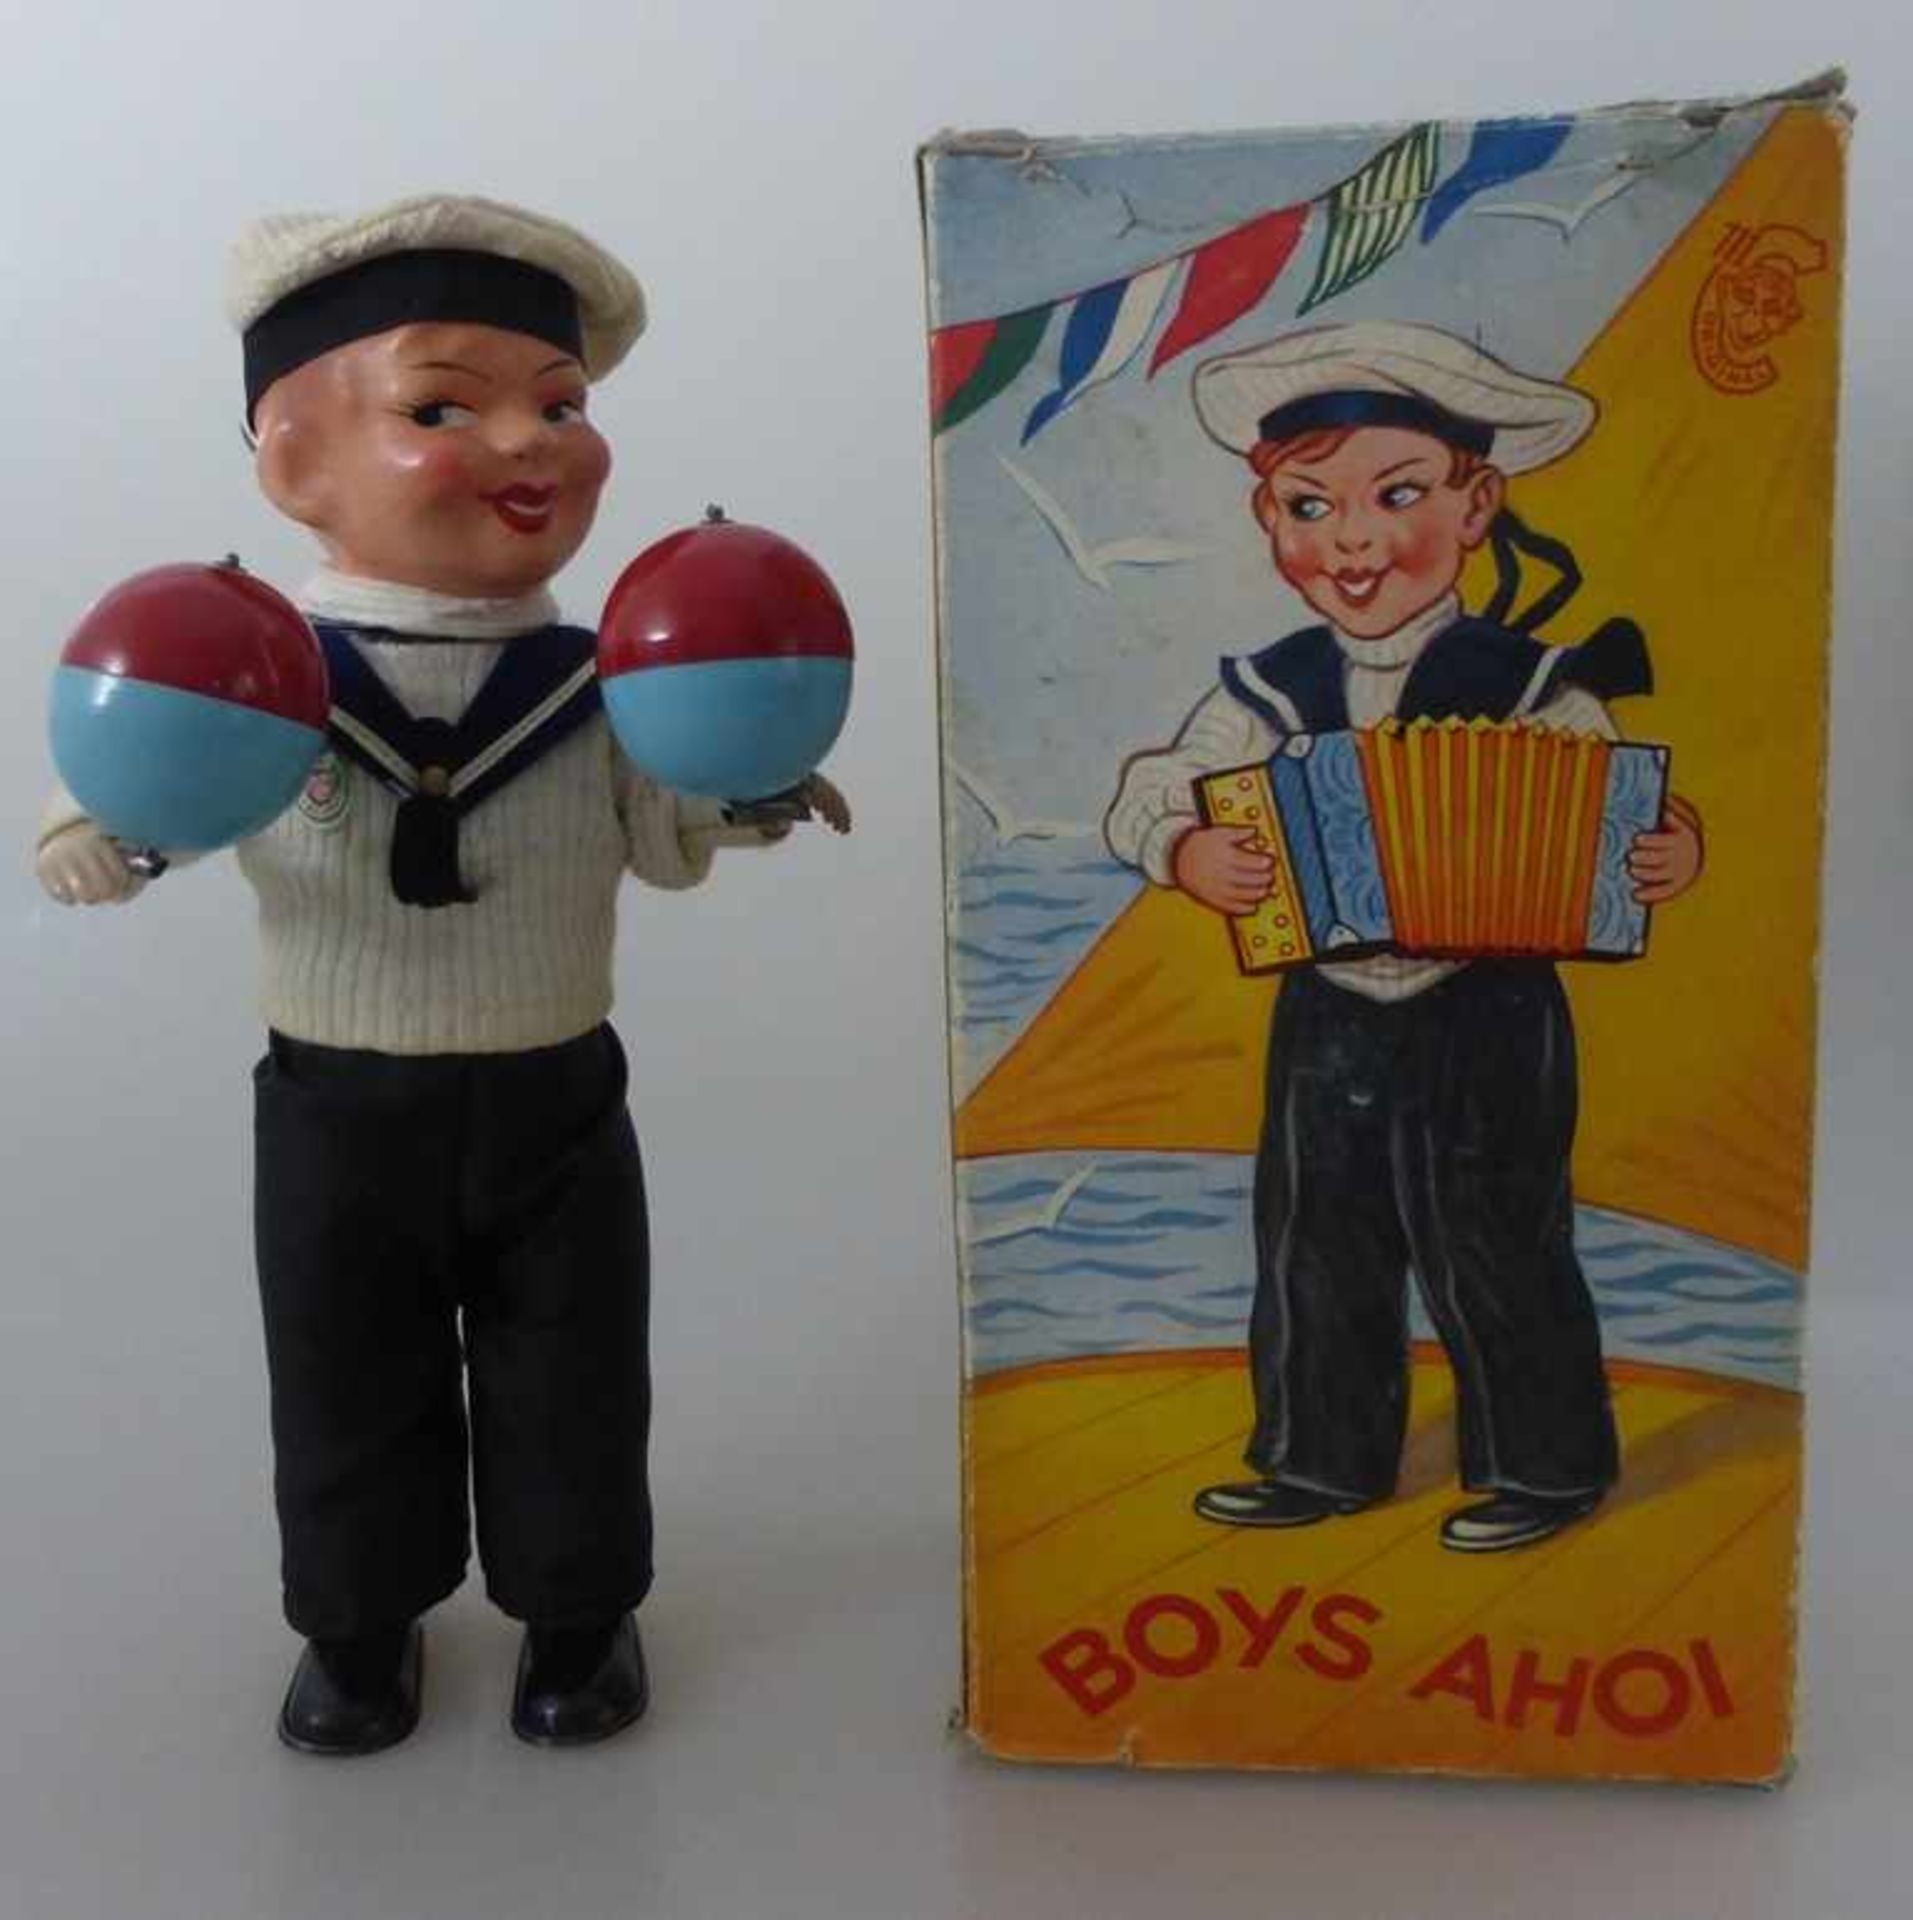 Spielwarenfabrik Carl Max - Creidlitz bei Coburg, Matrose "Boys Ahoi", 1950er Jahre im OK, Blech /